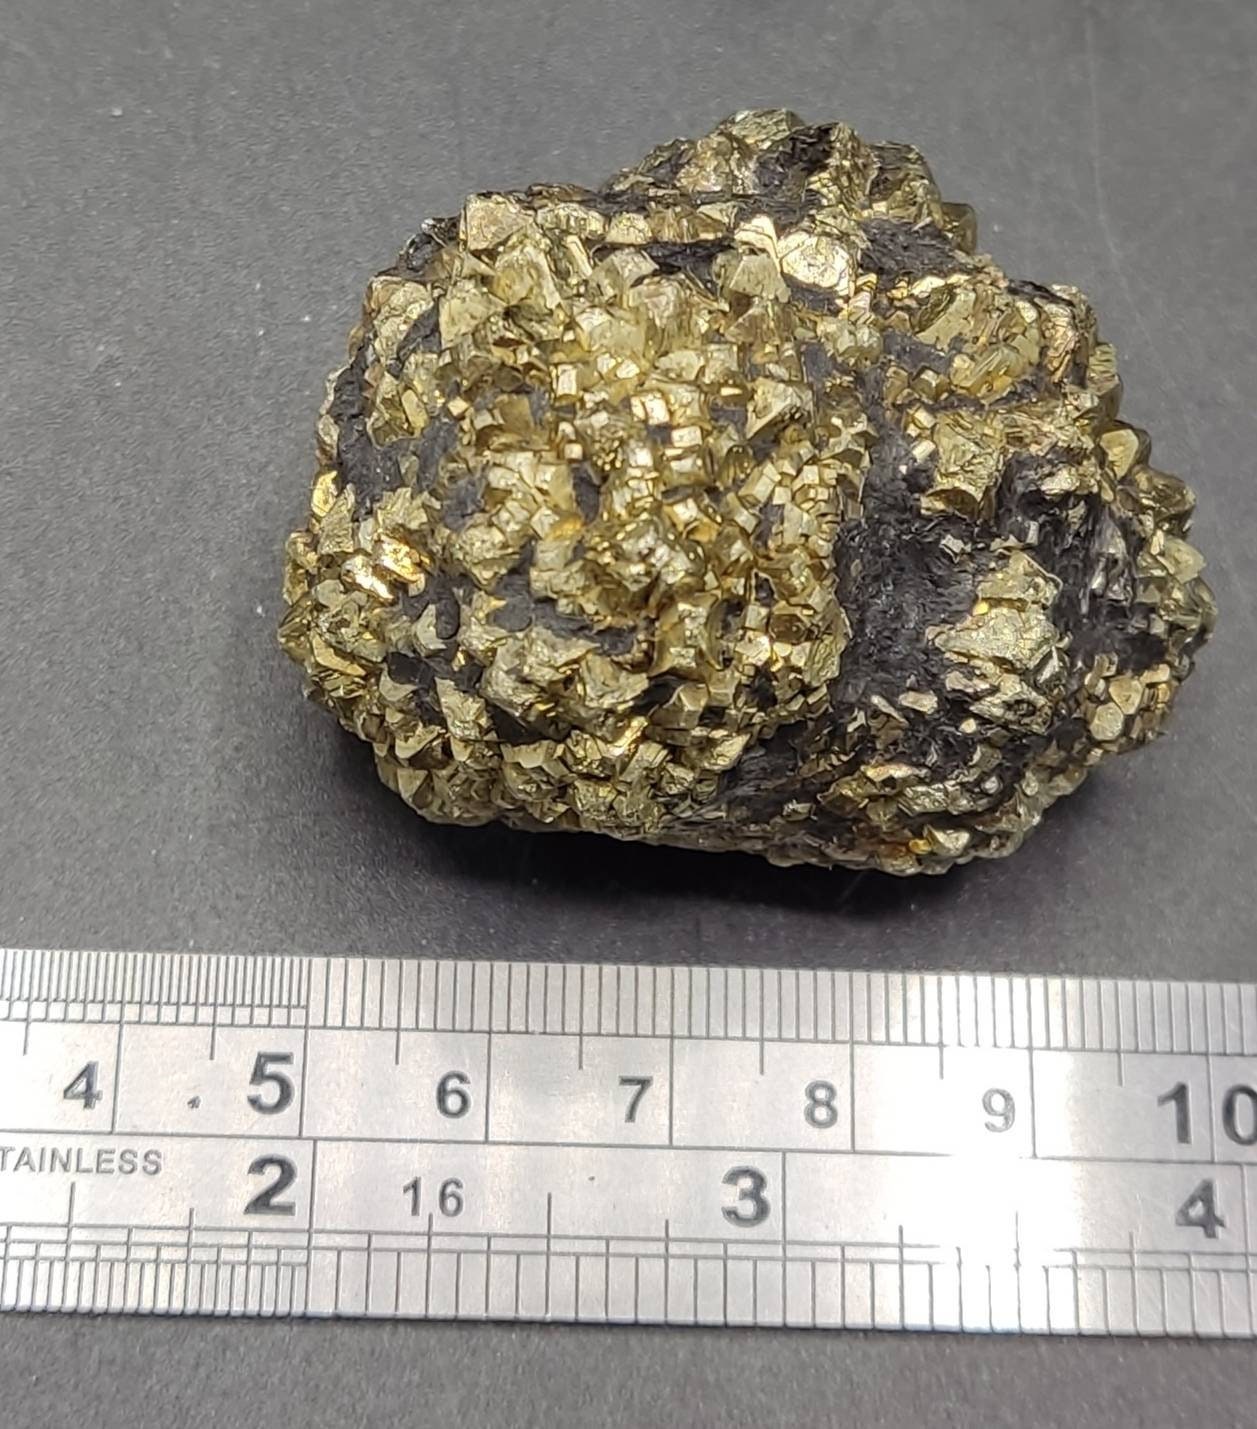 An amazing specimen of pyrite/marcasite 165 grams